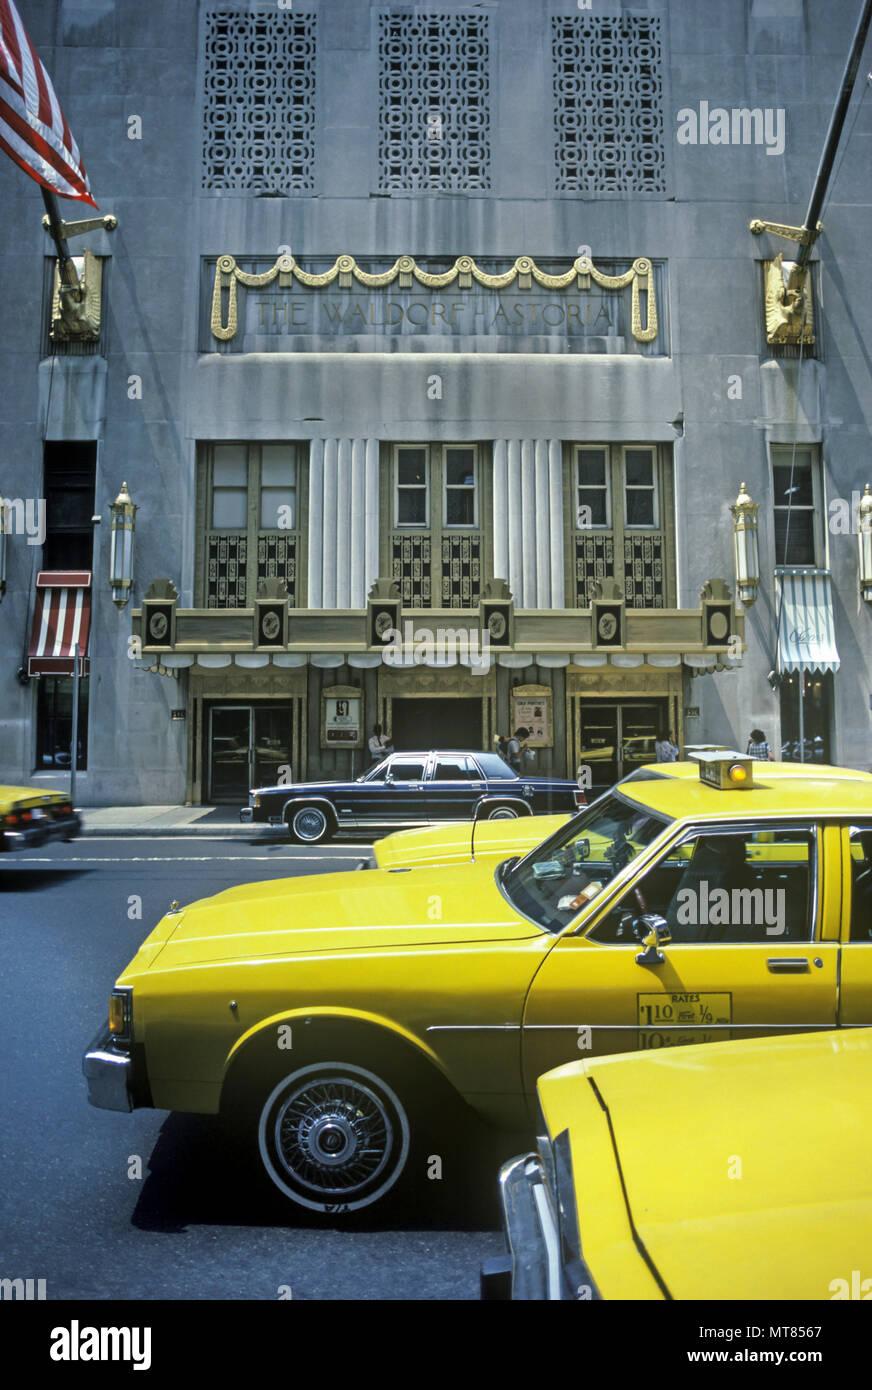 1988 historische GELBE CHEVROLET IMPALA TAXIS (© GENERAL MOTORS CORP 1985) Waldorf Astoria Hotel (© SCHULTZ & Weber 1931) Lexington Avenue EINGANG MIDTOWN MANHATTAN NEW YORK CITY USA Stockfoto